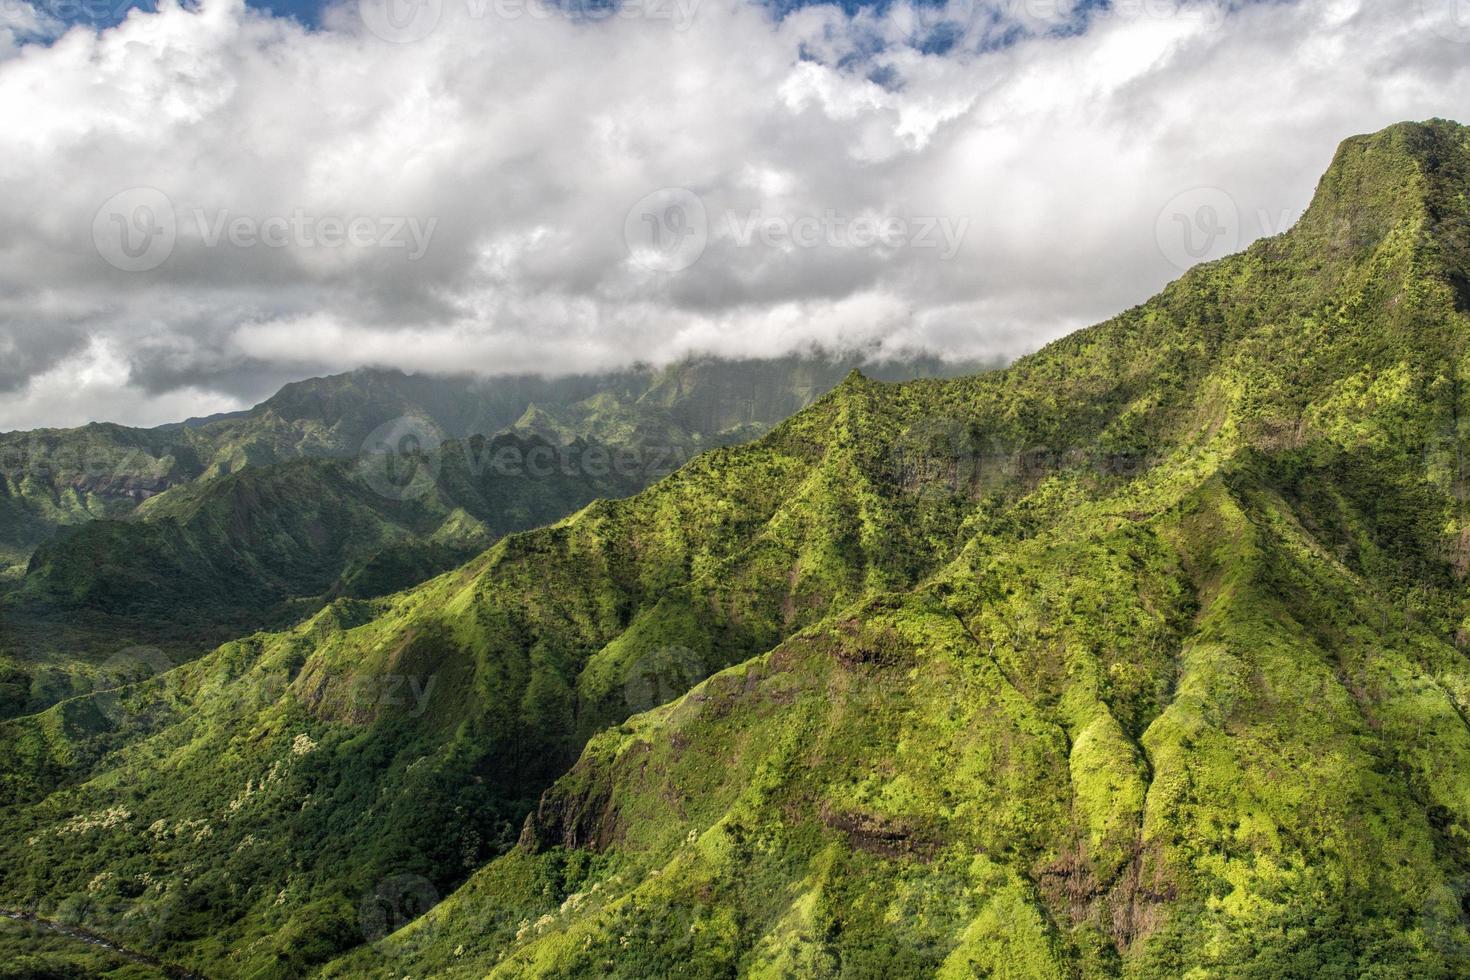 kauai green mountain vue aérienne décor de film jurassic park photo